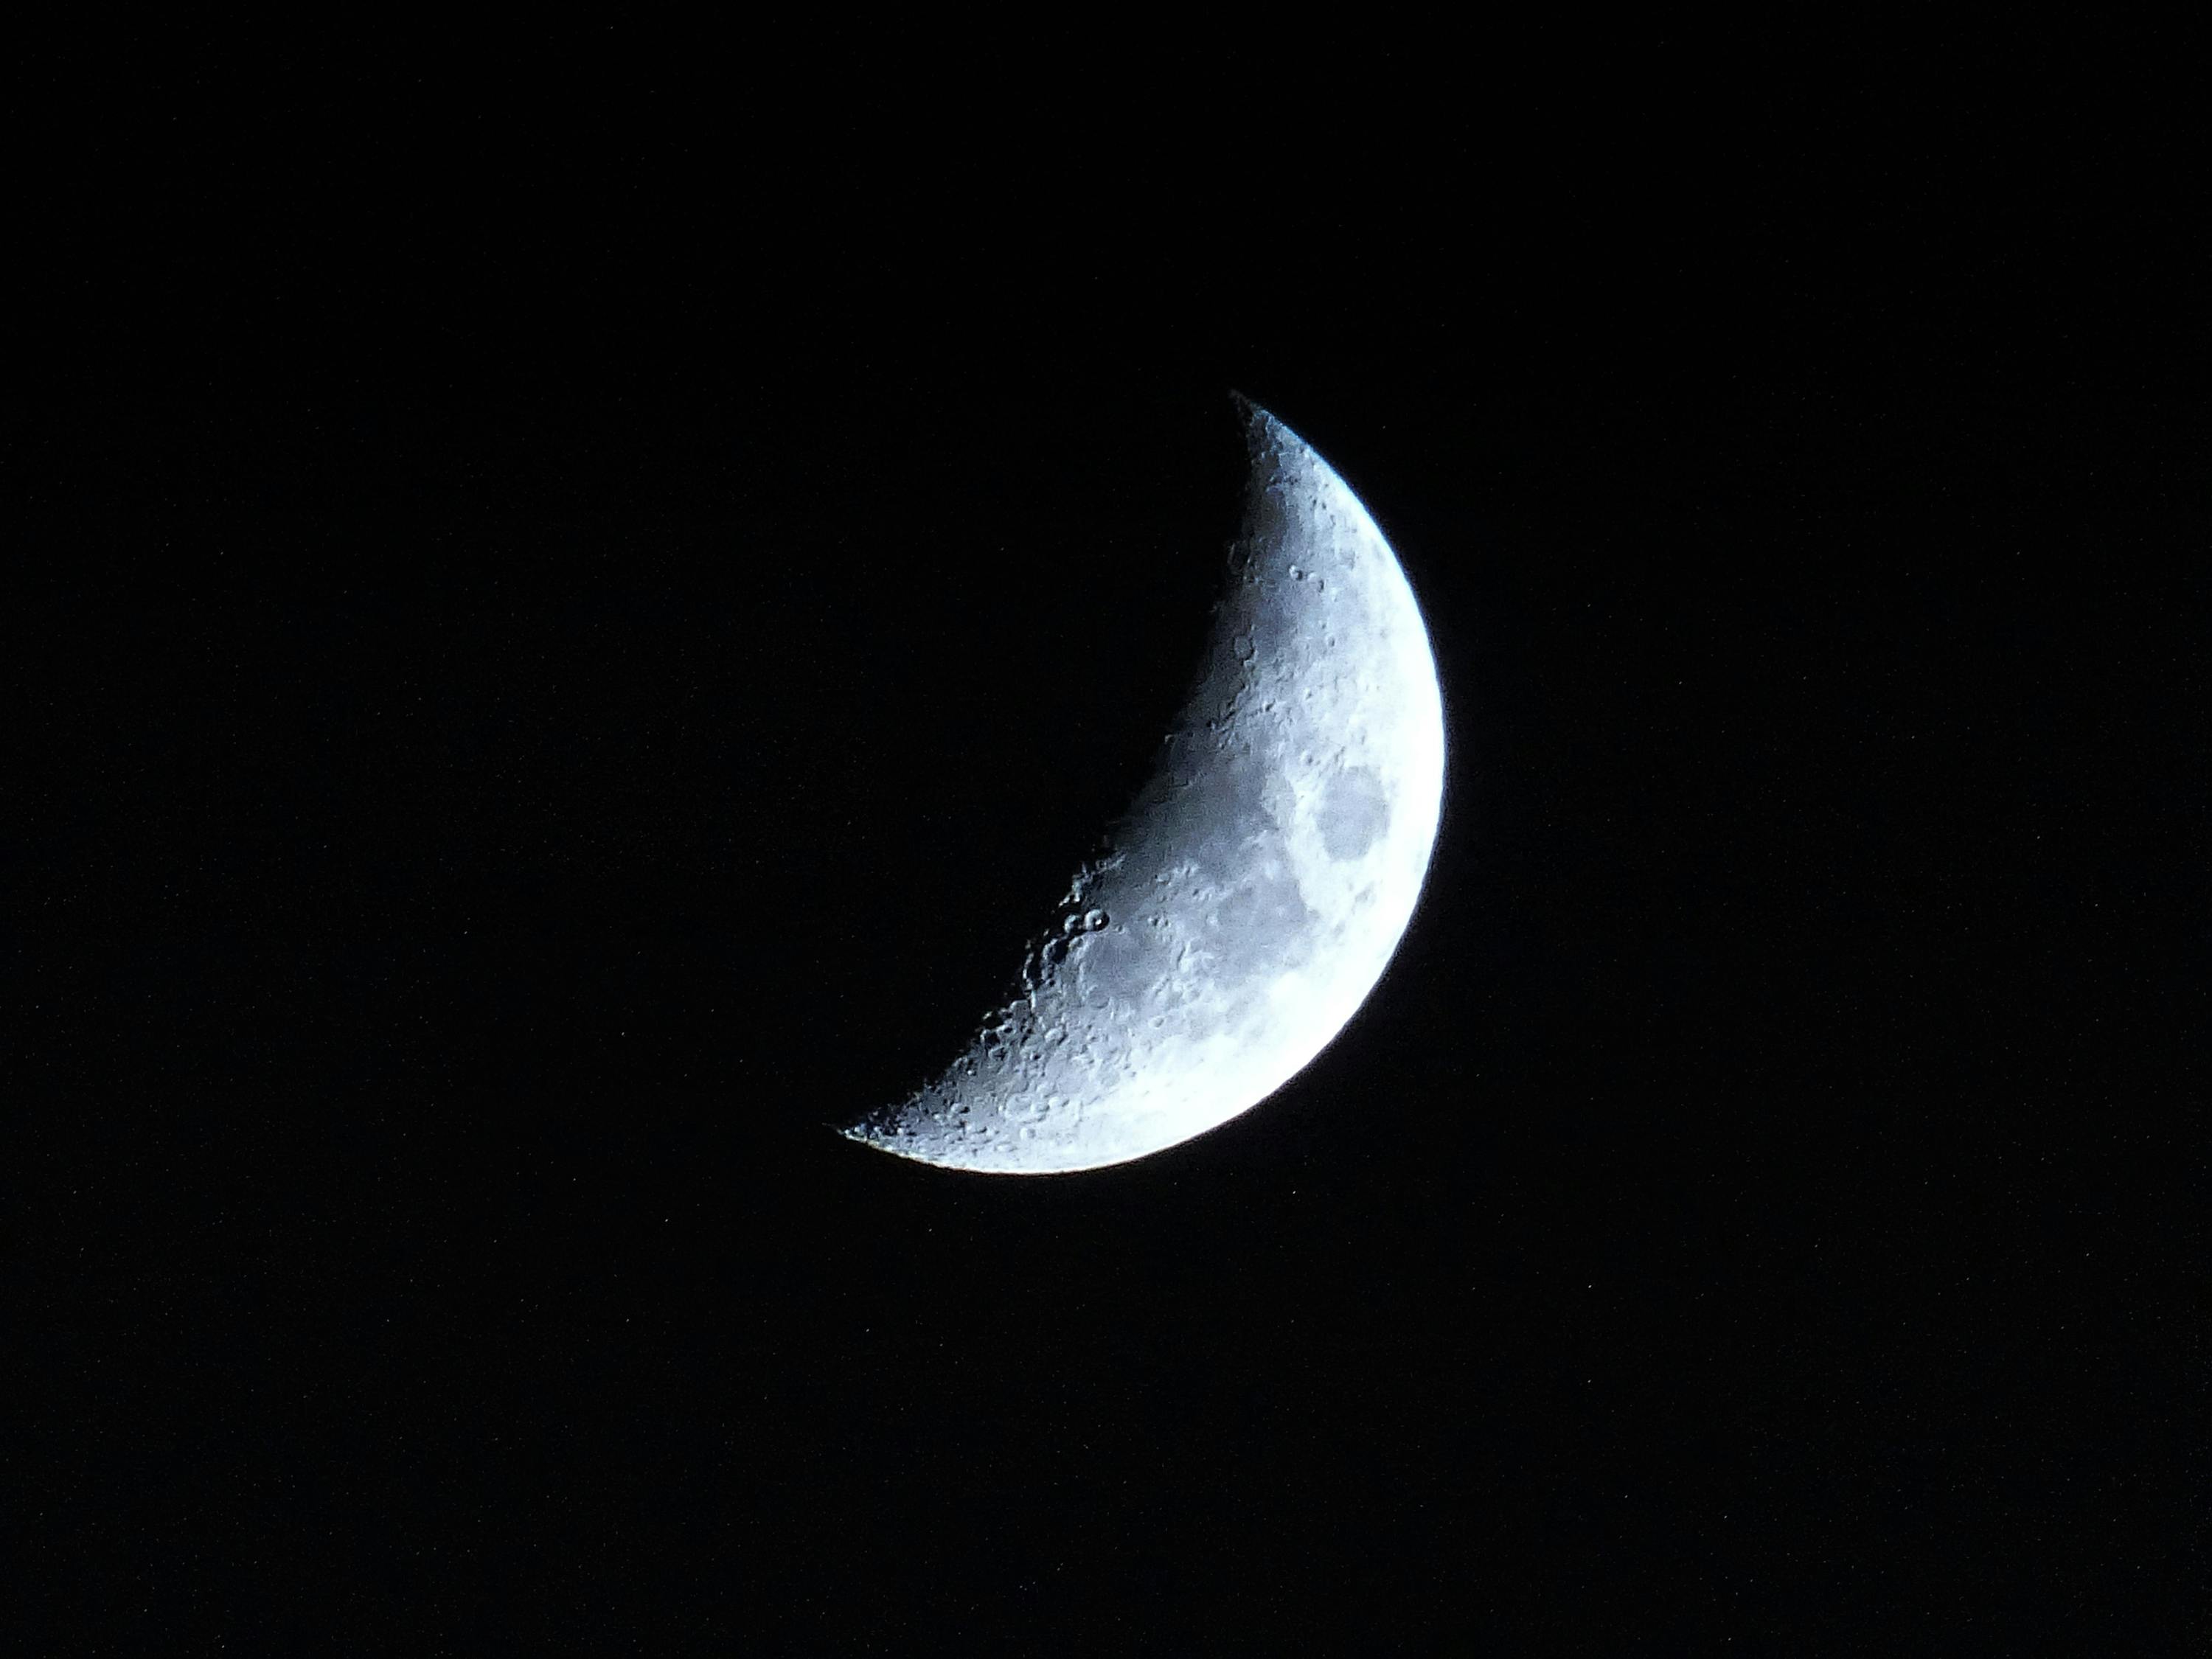 Photograph of Moon · Free Stock Photo